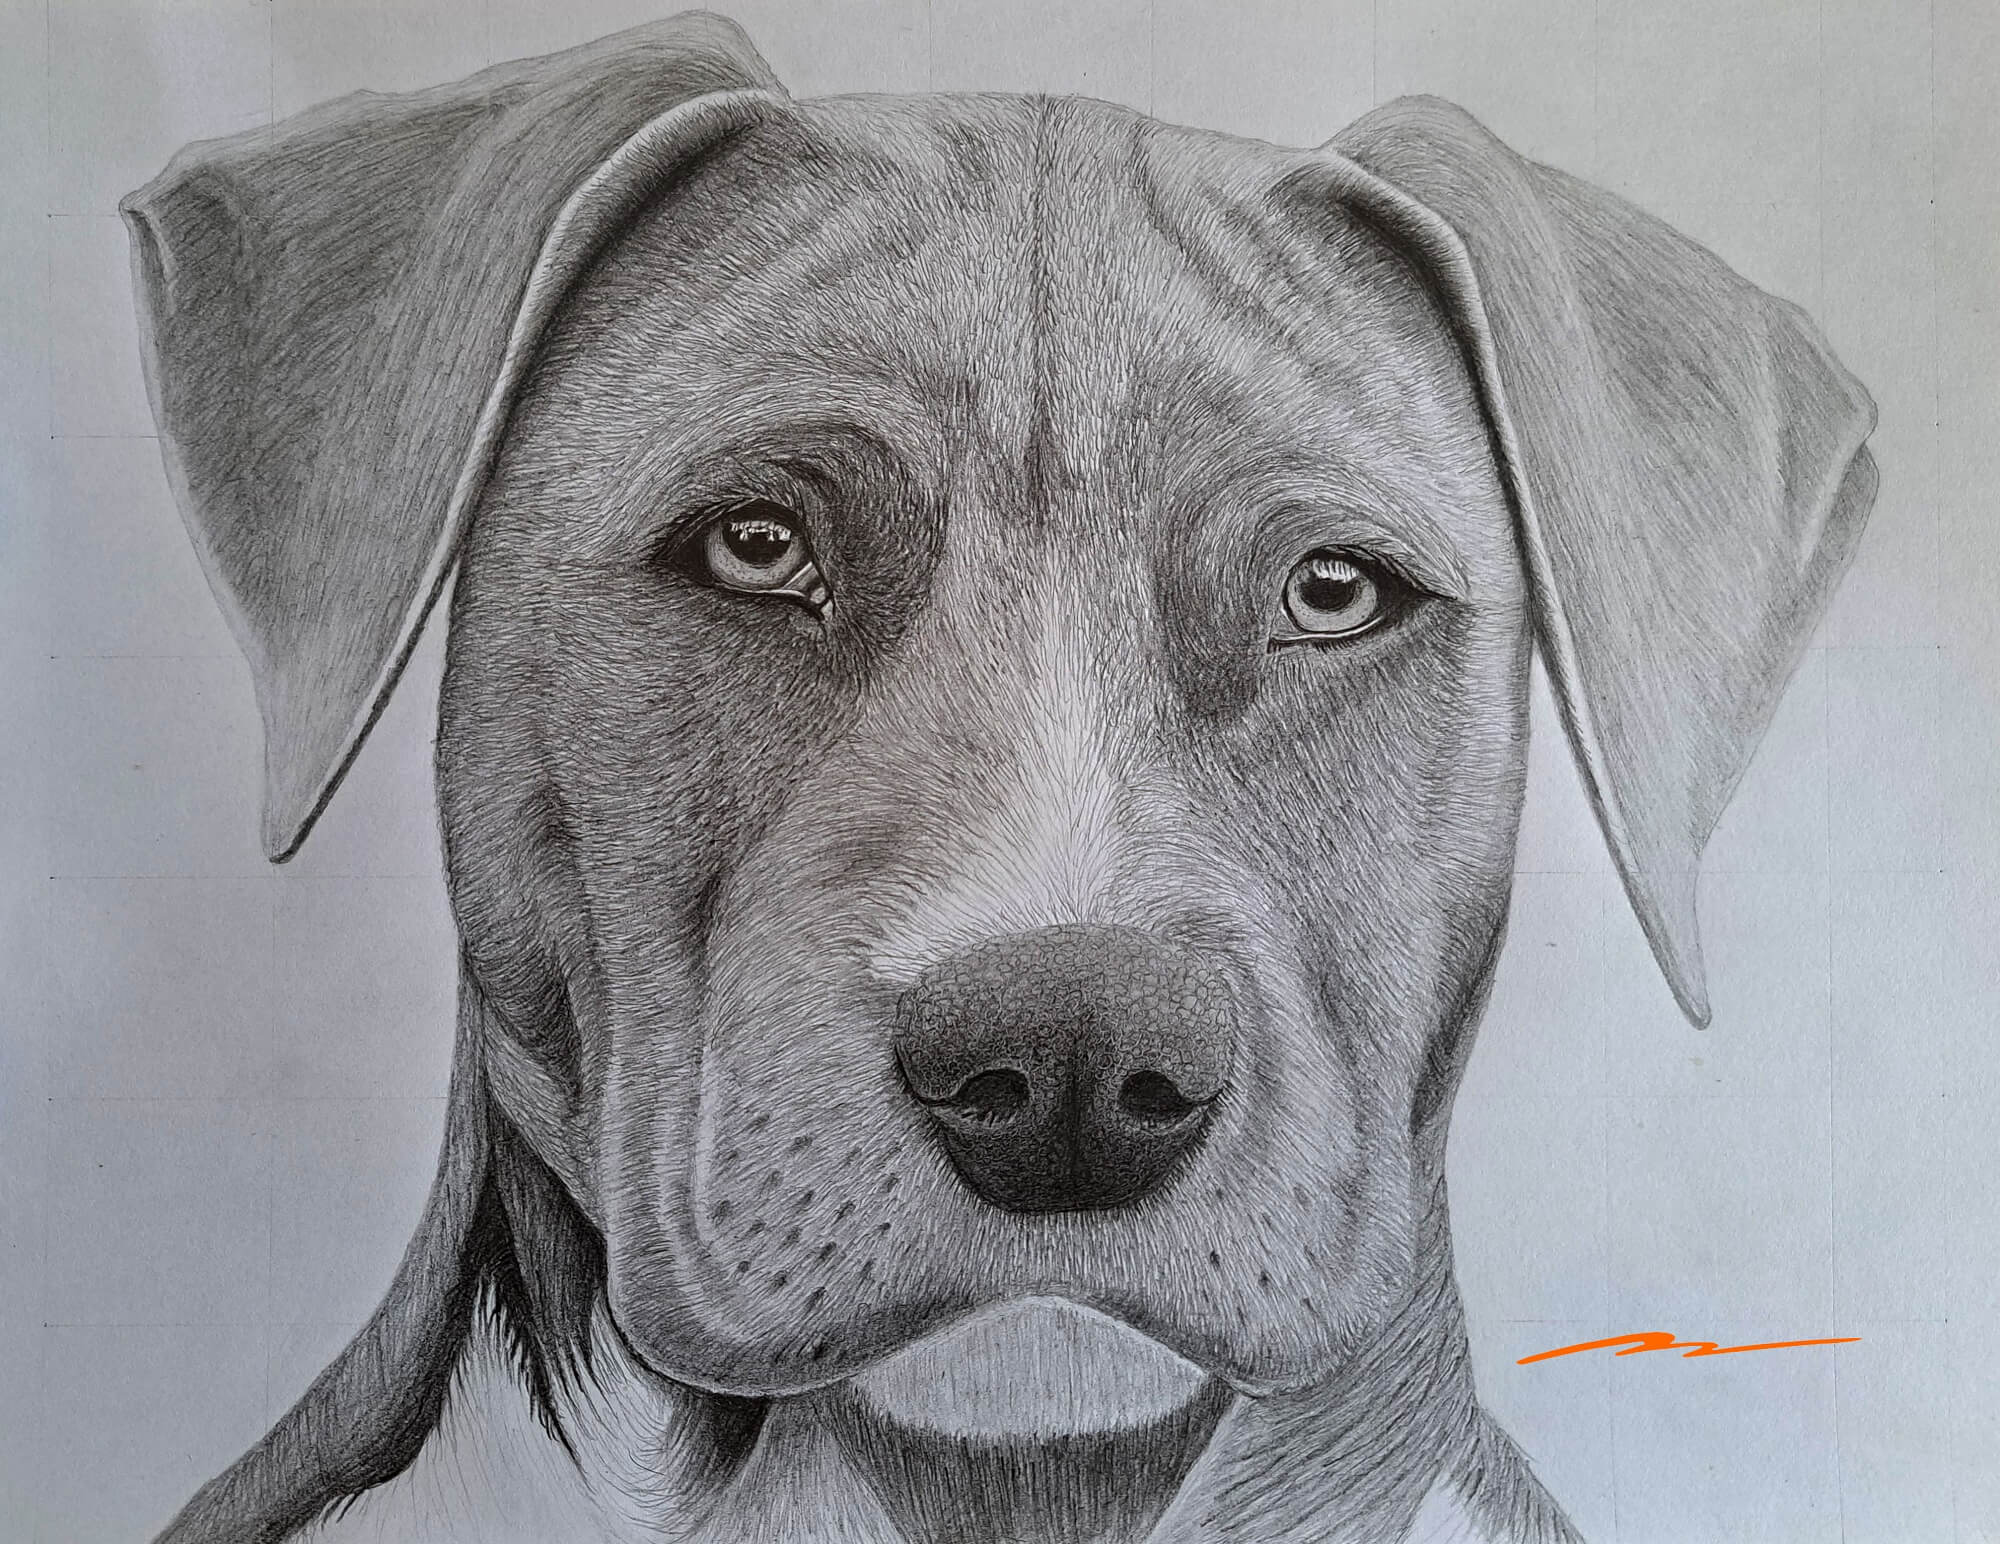 https://muusart.b-cdn.net/wp-content/uploads/2022/11/10.-How-to-Draw-a-Dog-Head-Drawing-a-realistic-dogs-head-by-Muus-Art.jpg